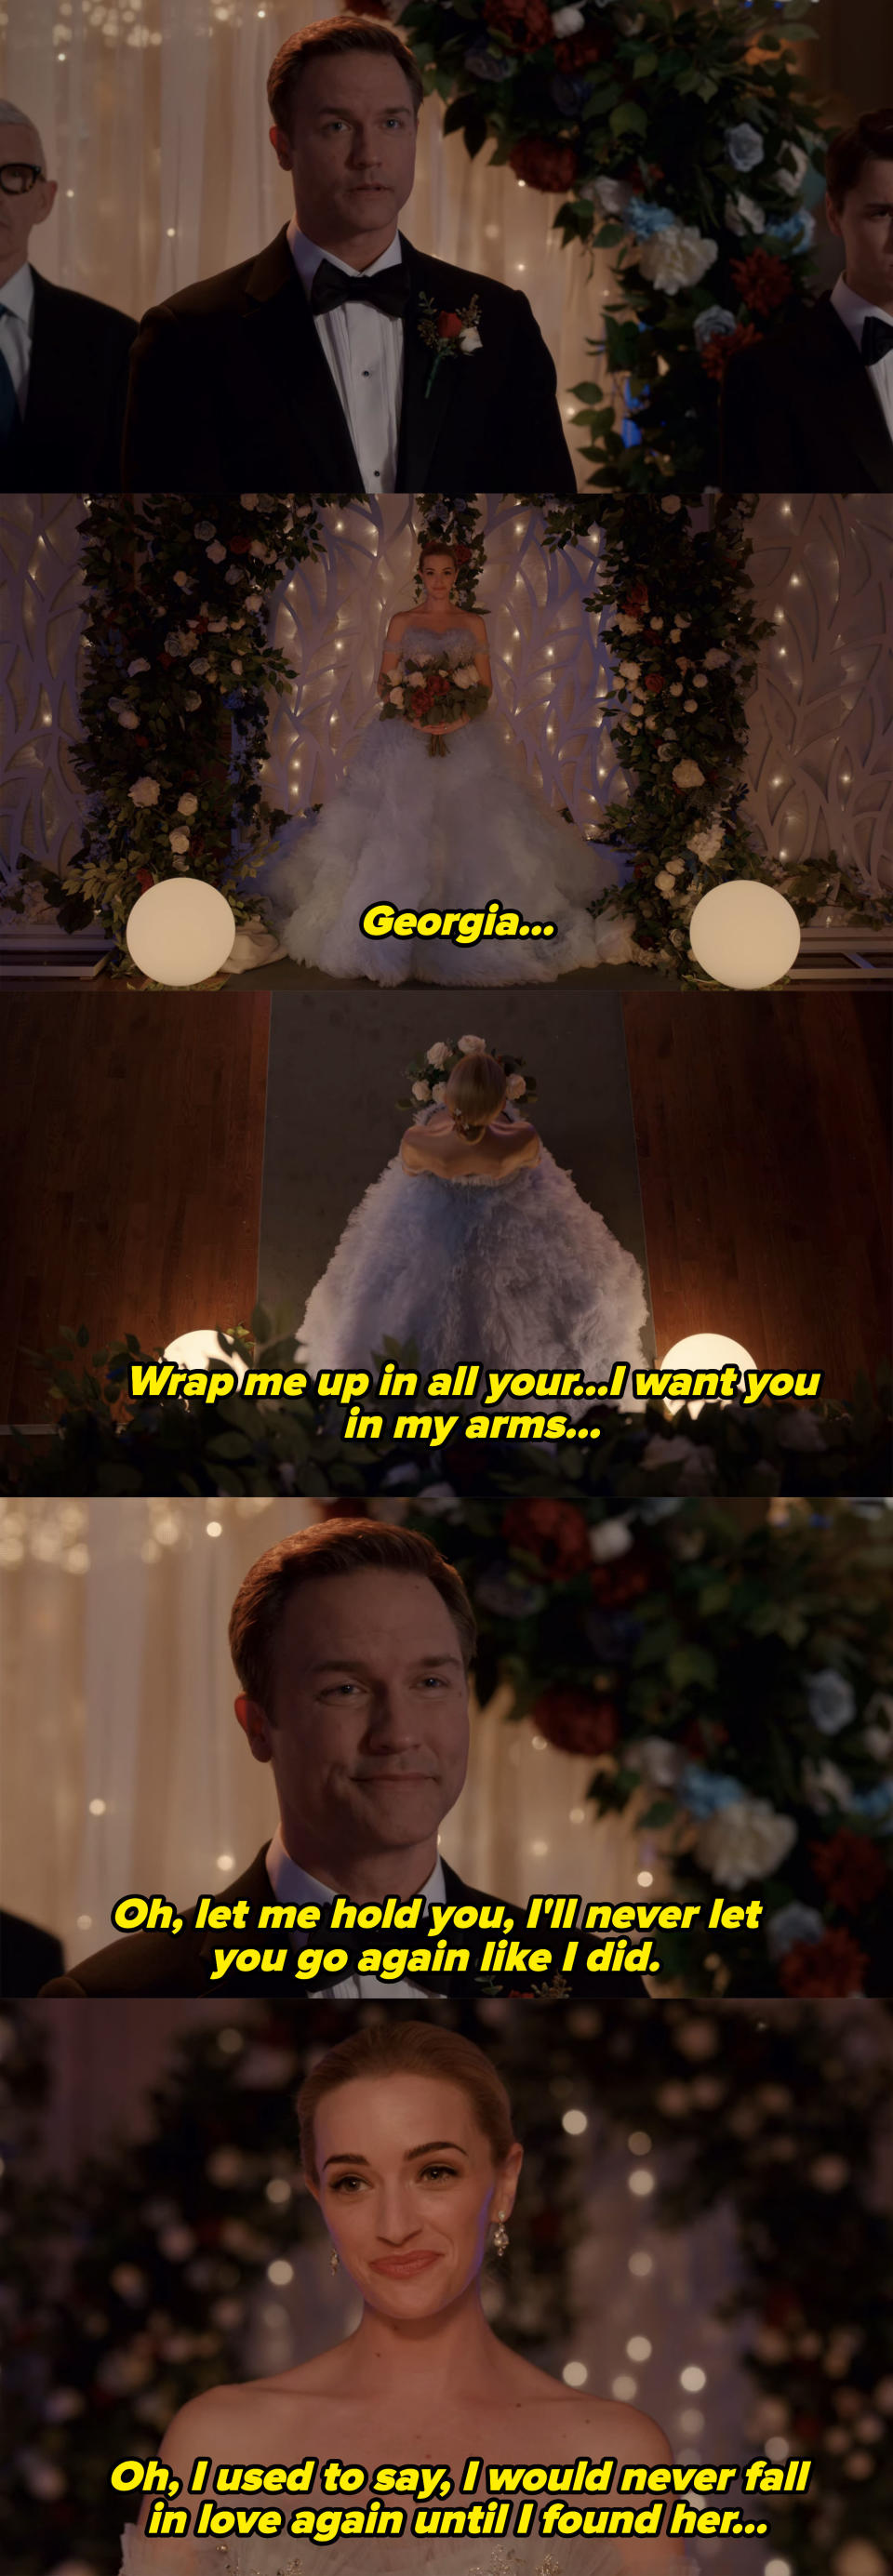 Screenshots from "Ginny & Georgia"